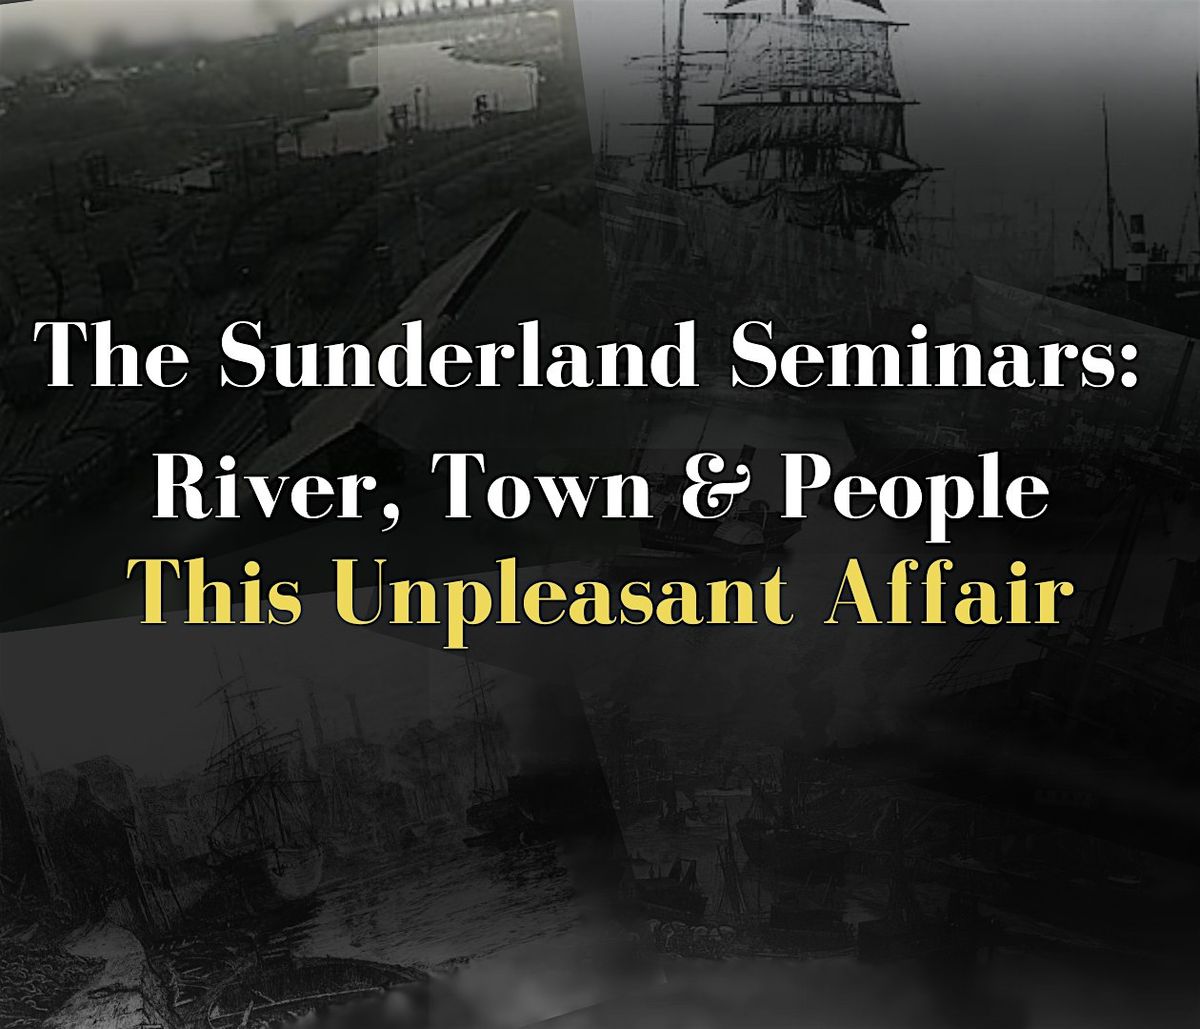 Sunderland Seminars: River, Town & People- This Unpleasant Affair